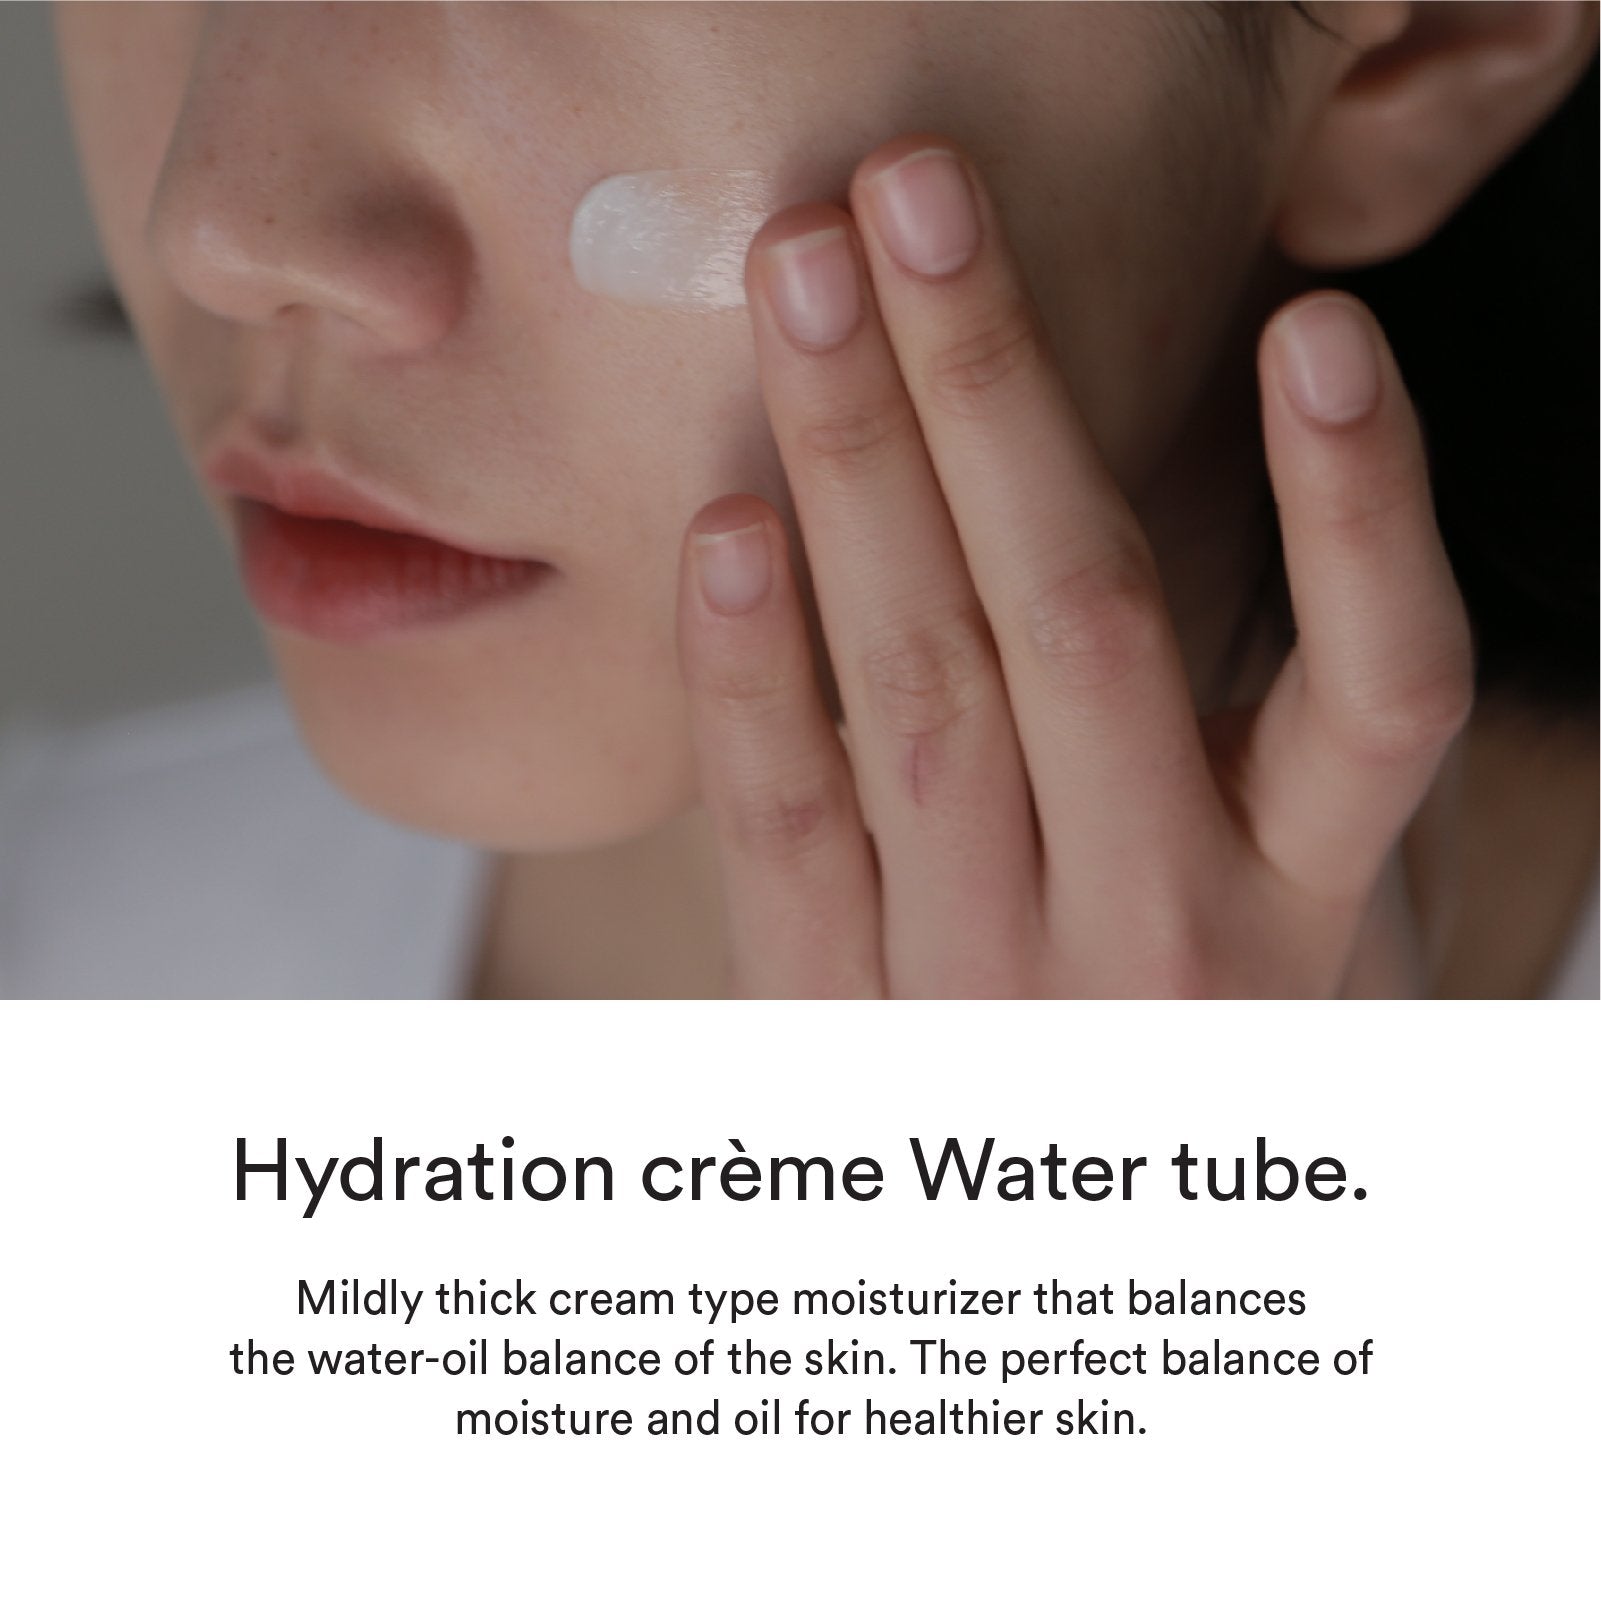 Abib - Hydration Crème Water Tube